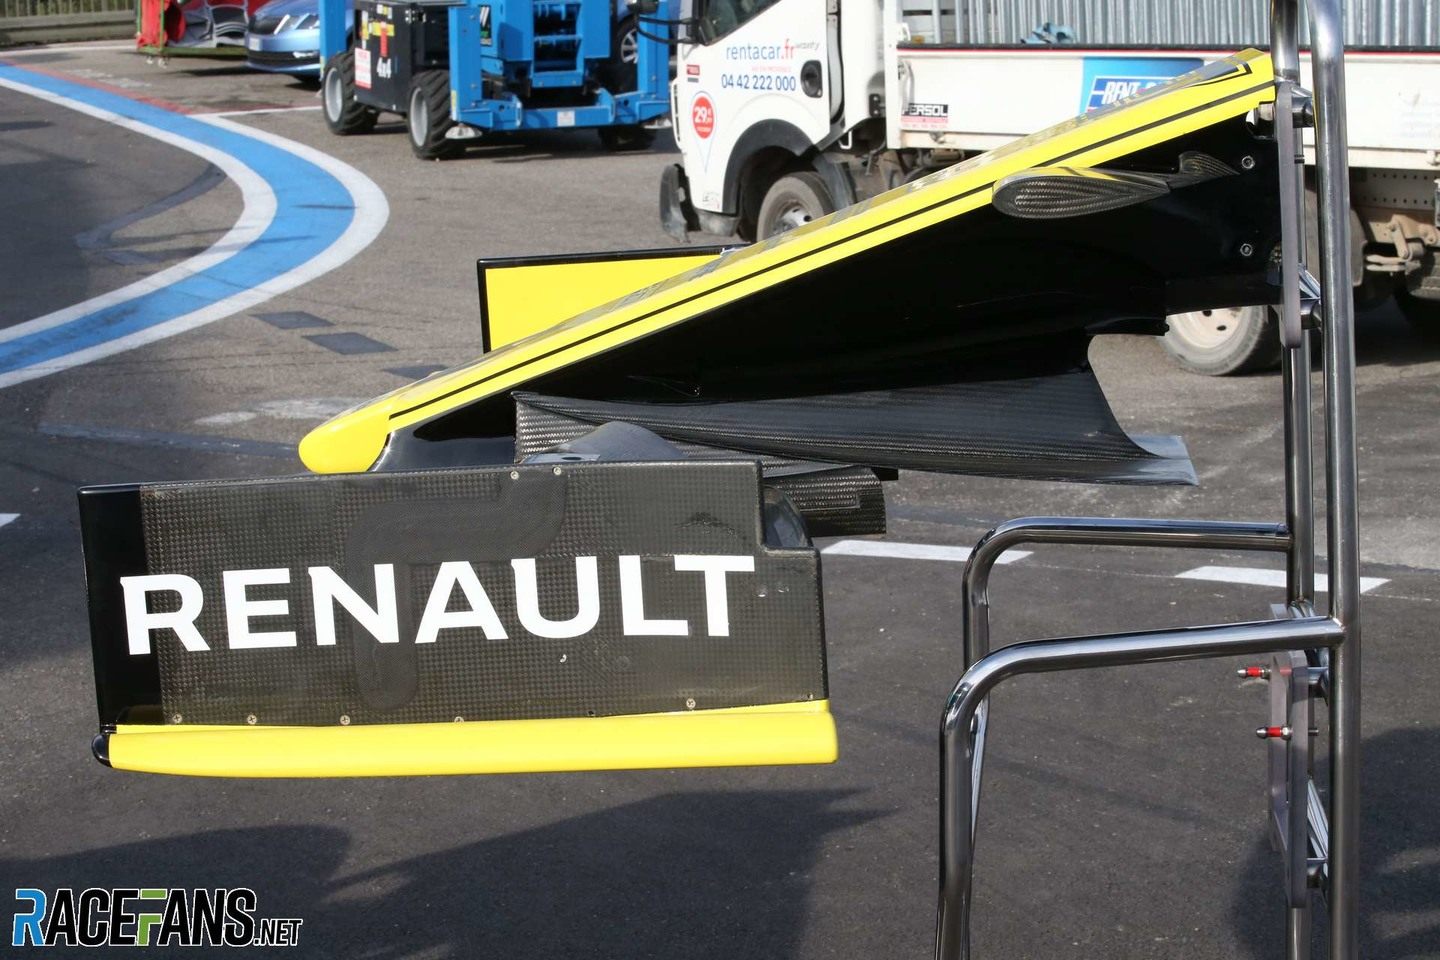 "Мыс" Renault © Racefans.net